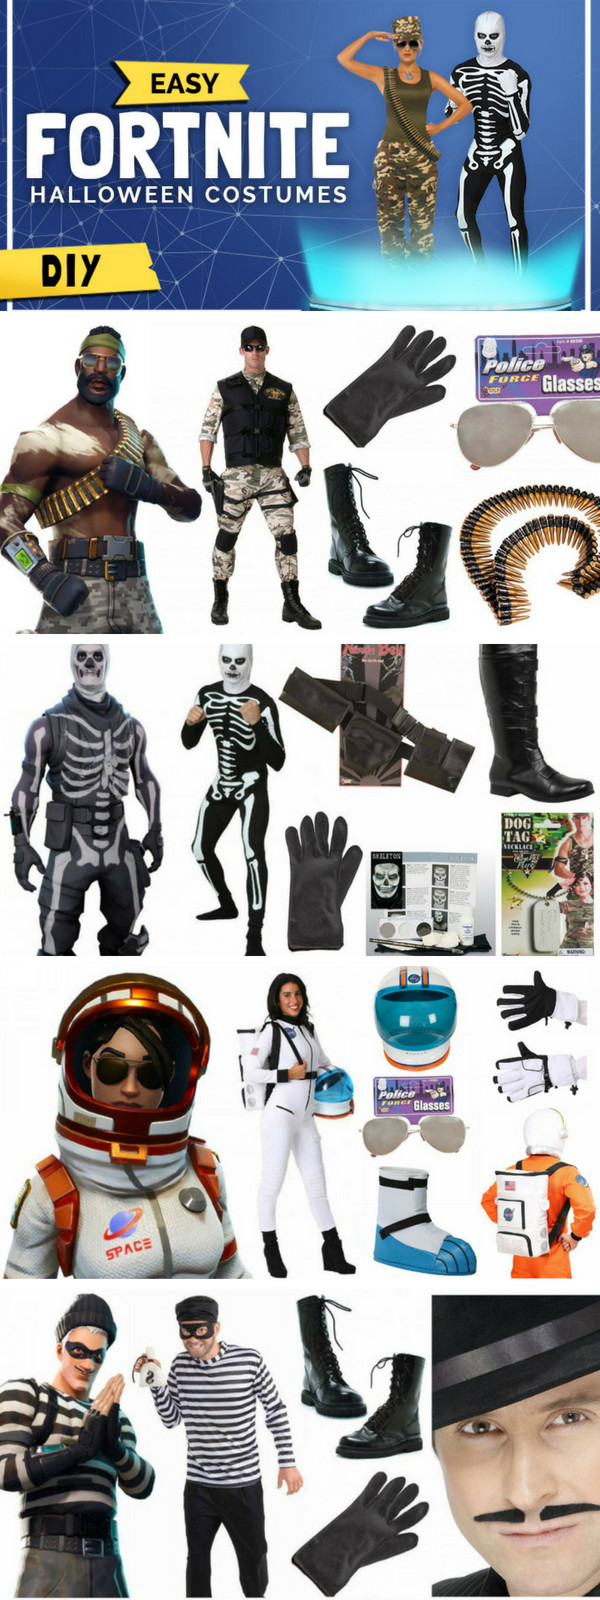 DIY Fortnite Costume
 DIY Easy Fortnite Halloween Costumes